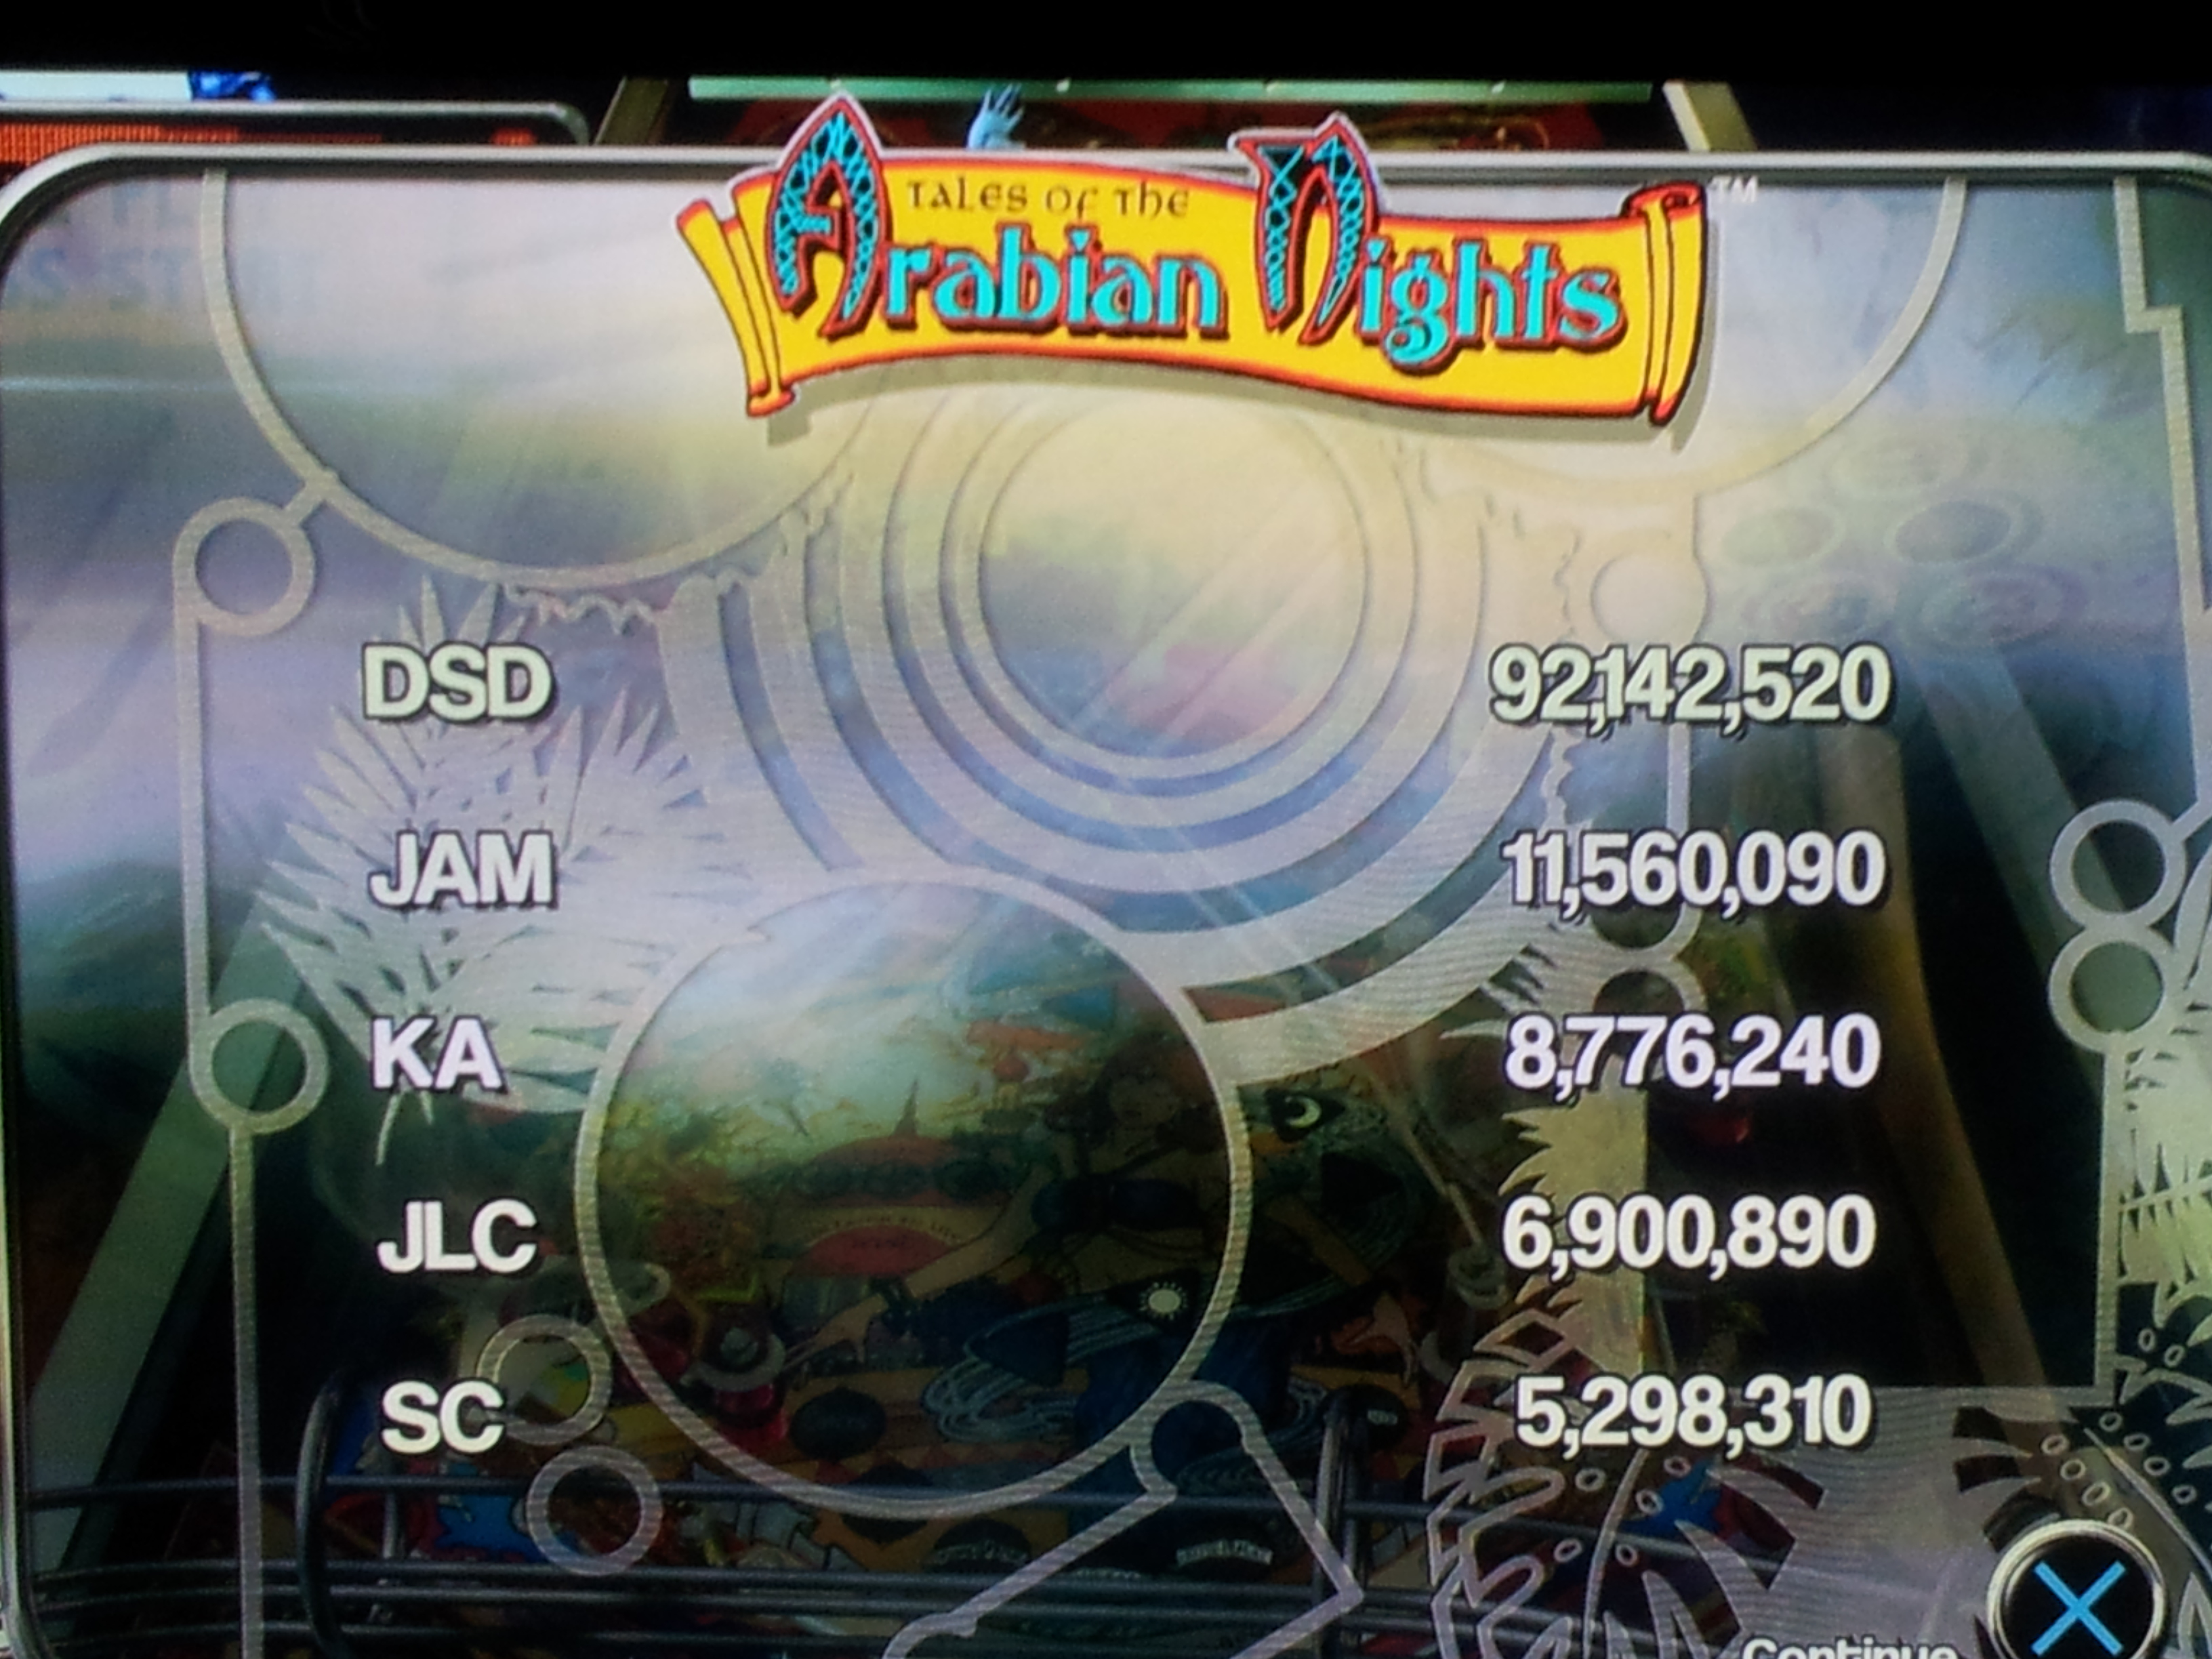 Pinball Arcade: Arabian Knights 92,142,520 points